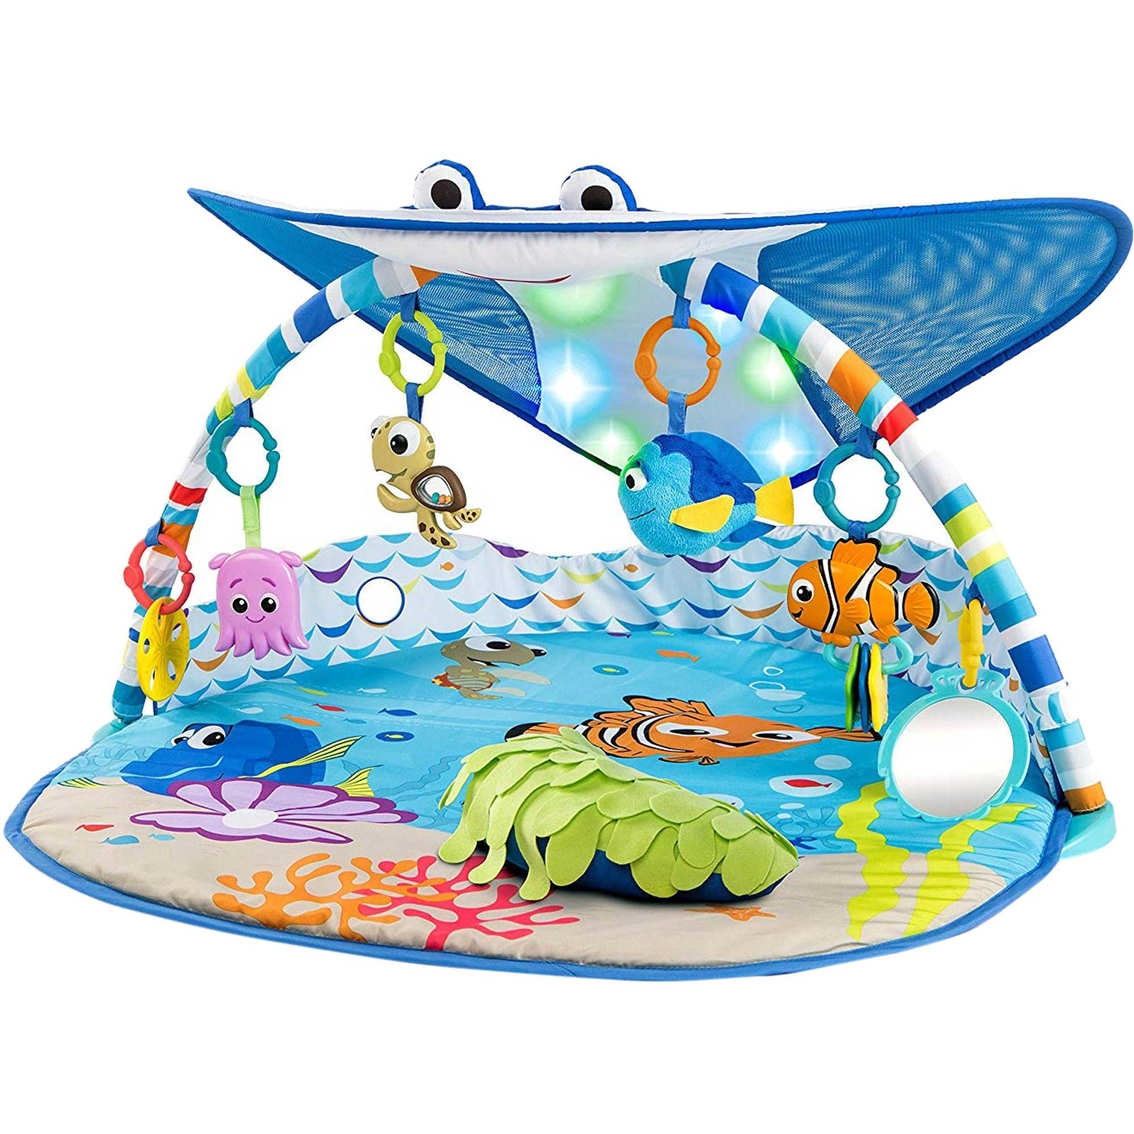 Disney Baby Finding Nemo Mr. Ray's Ocean Lights Gym - Image 2 of 10